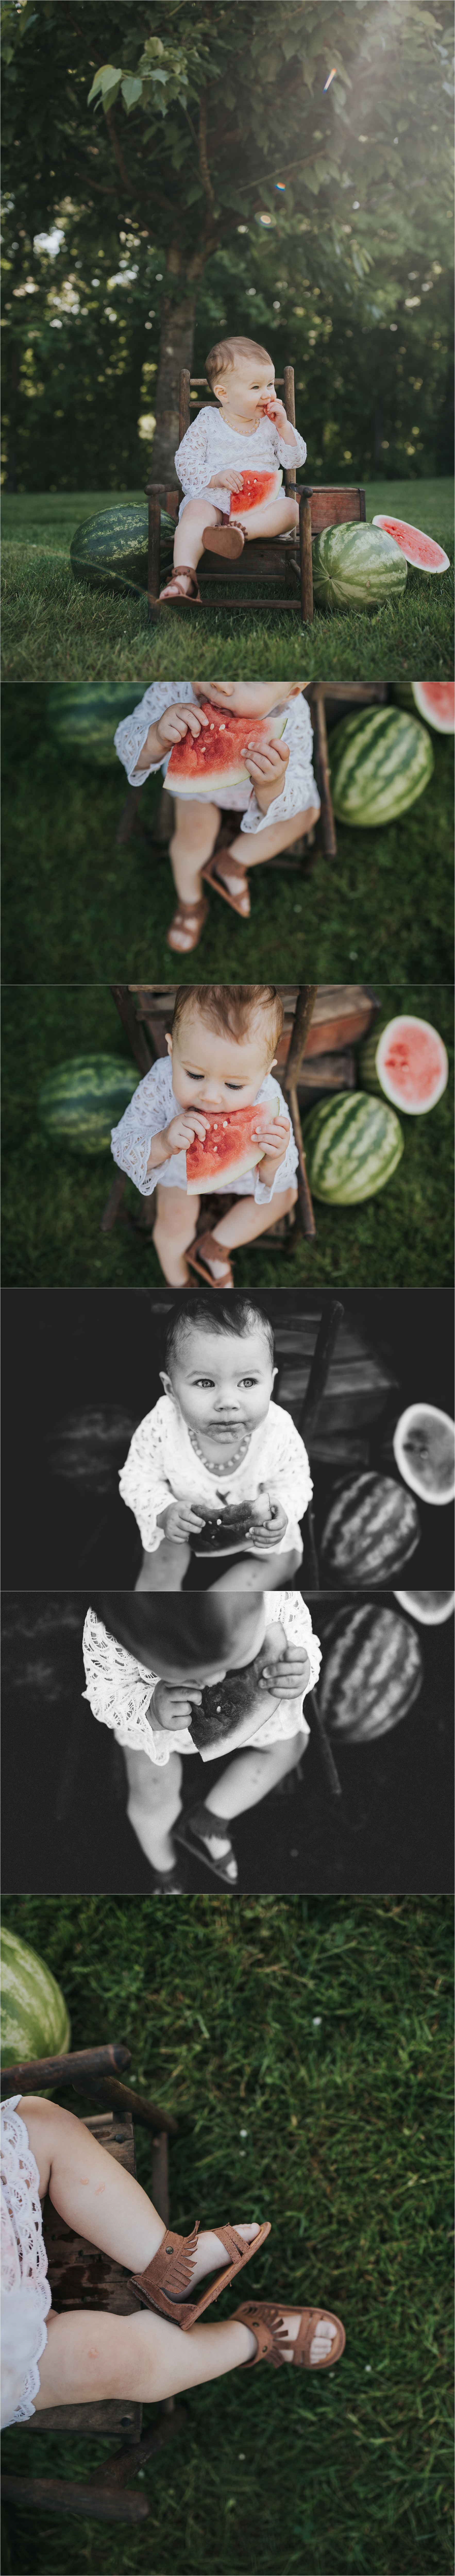 01-pittsburgh-lifestyle-photographer-watermelon-first-birthday-session-oakwood-photo-video.jpg